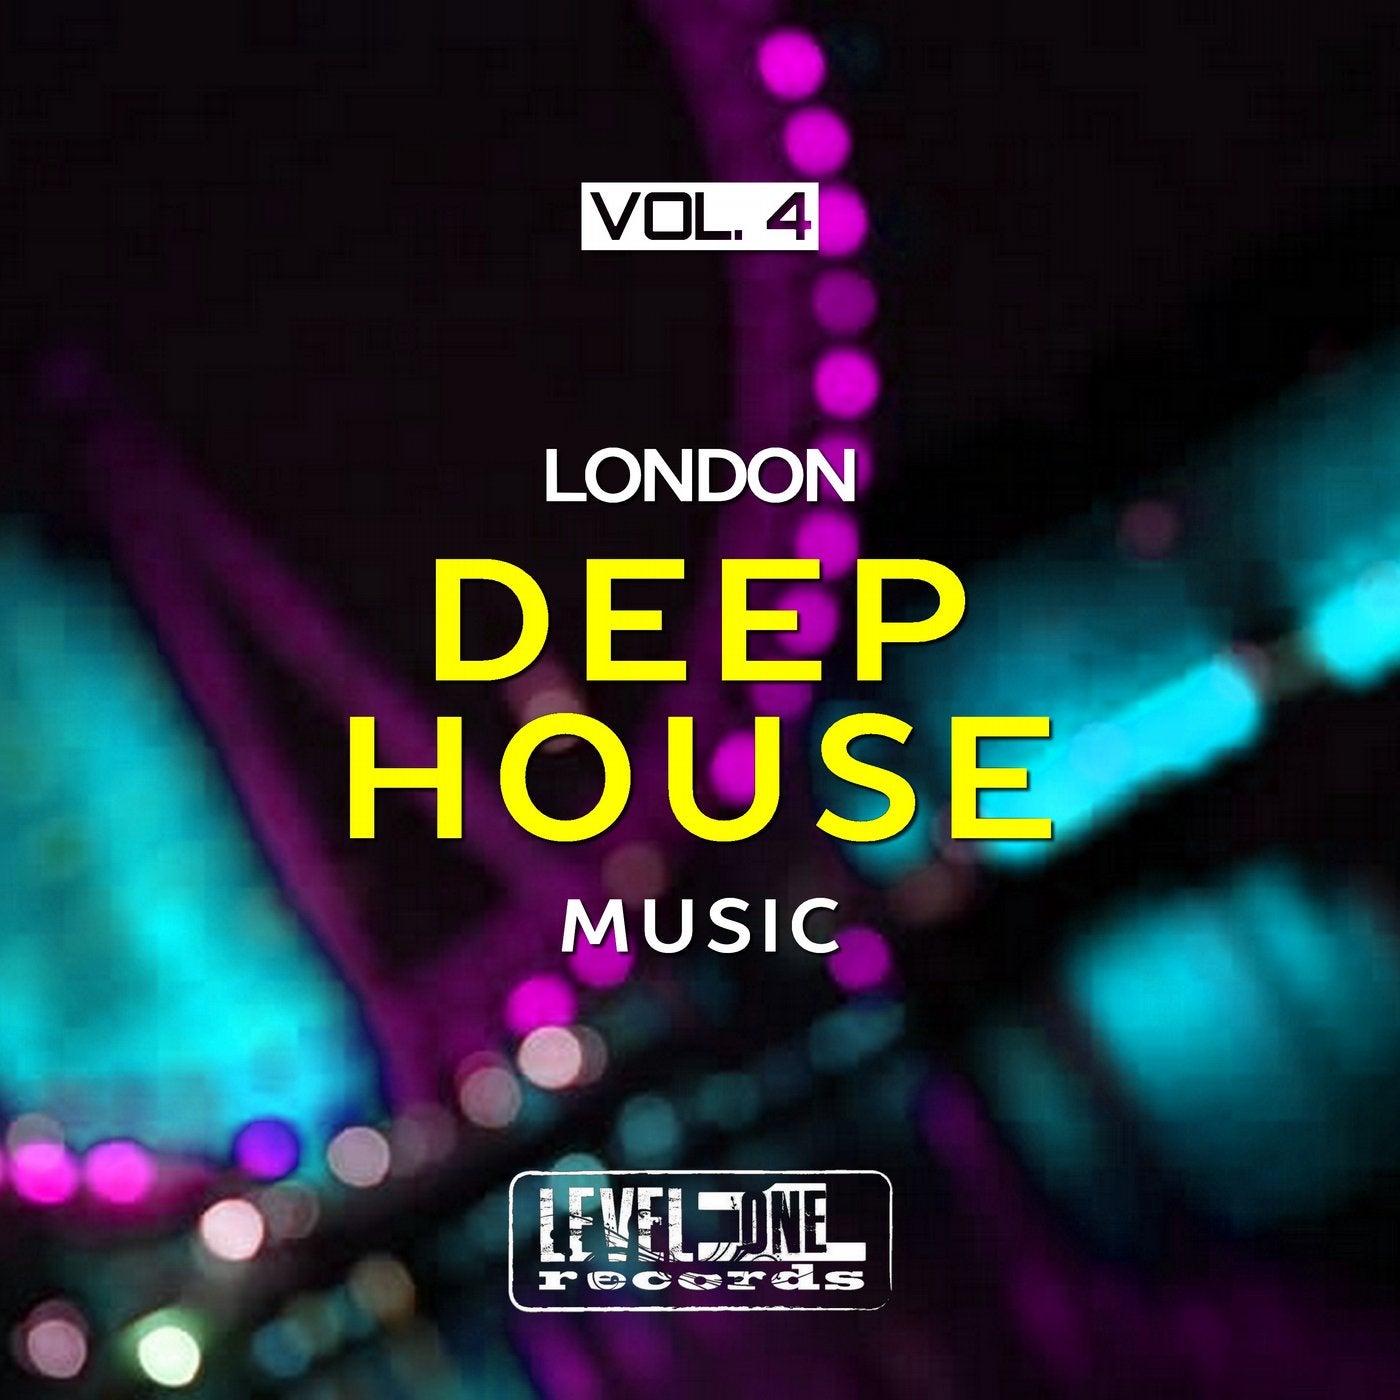 London Deep House Music, Vol. 4